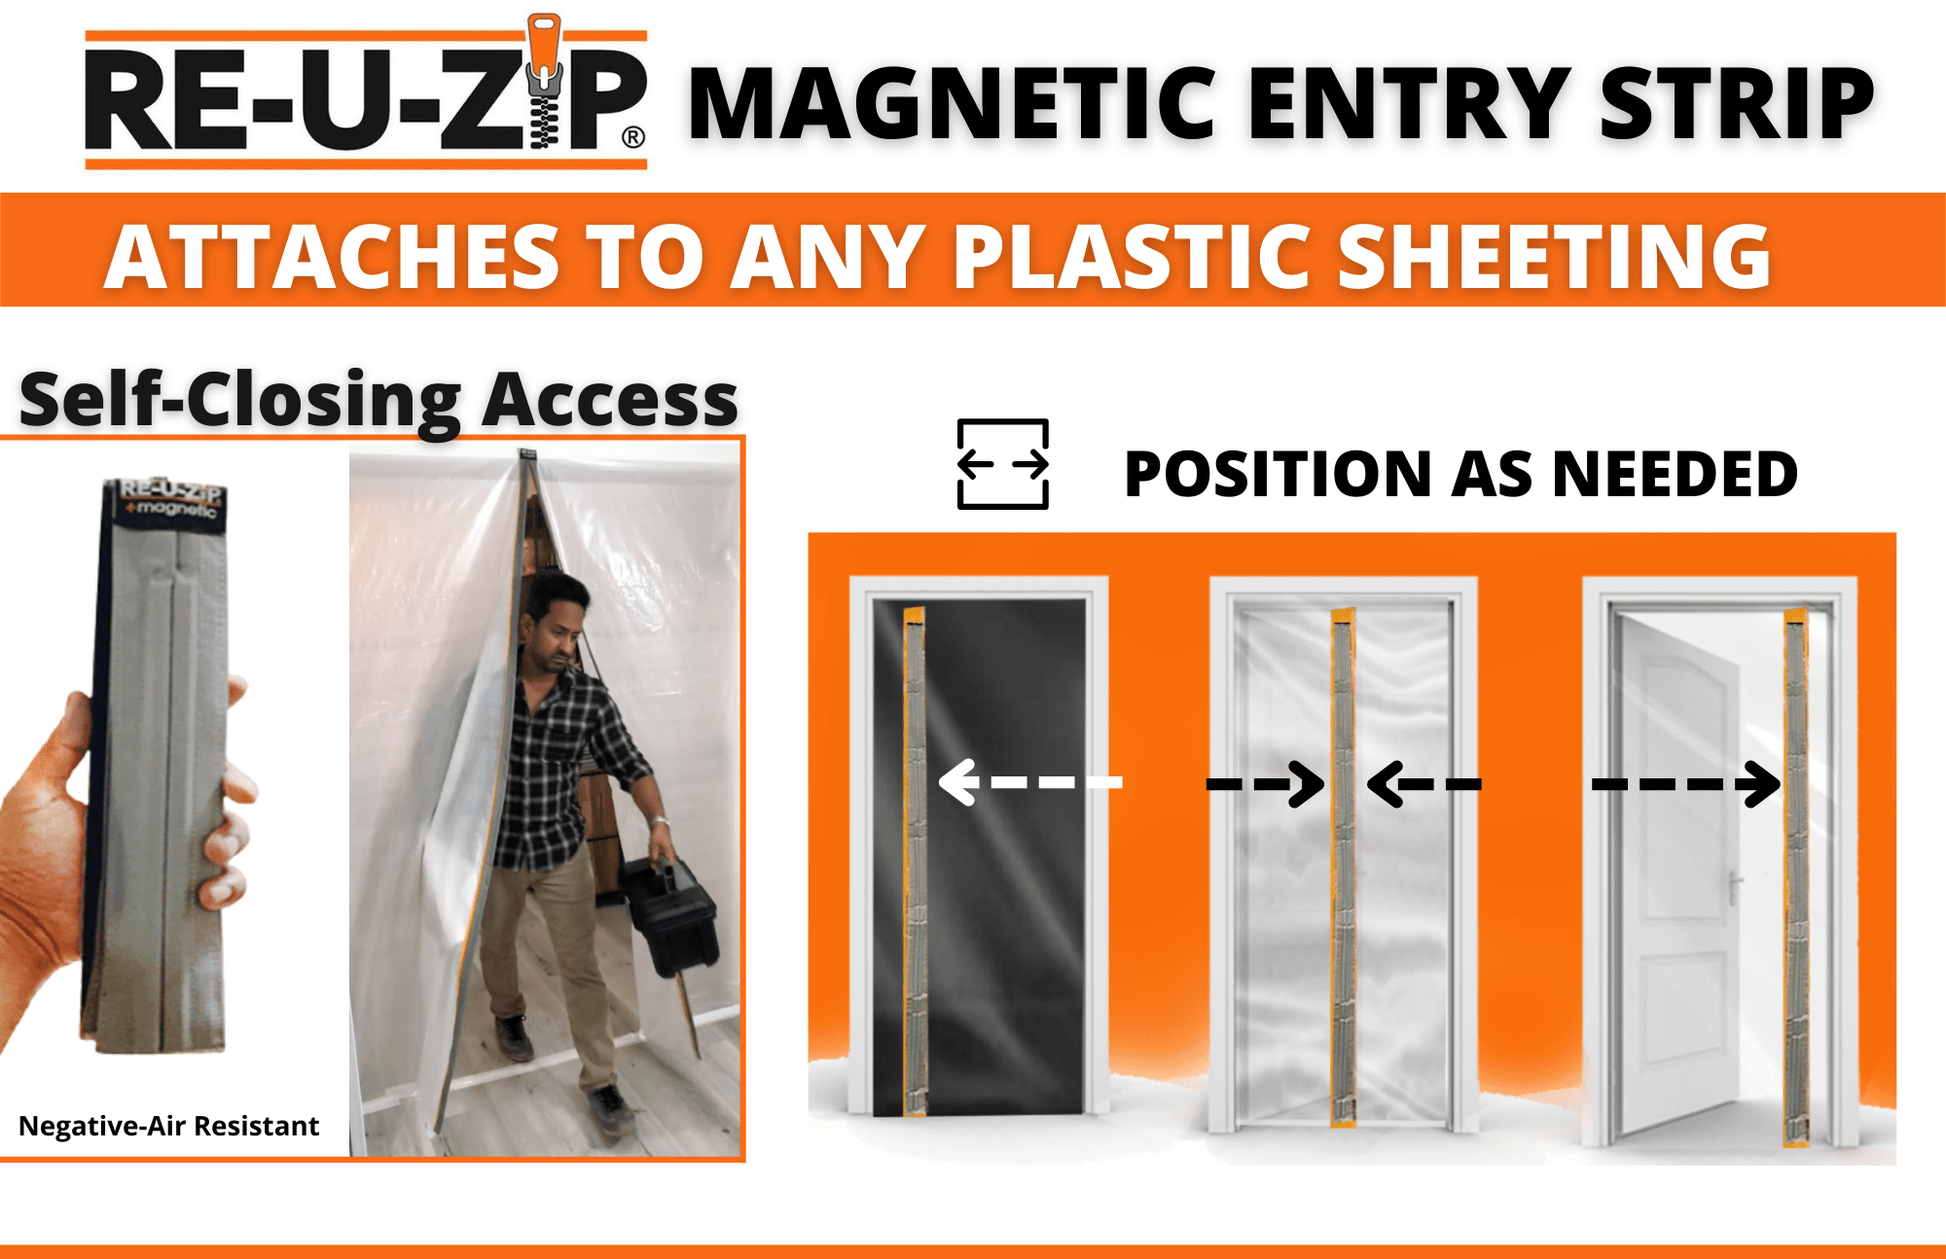 RE-U-ZIP INNOVATIVE DUST BARRIER SOLUTIONS Construction RE-U-ZIP™ Reusable Magnetic Entry Strip Pro Bundle